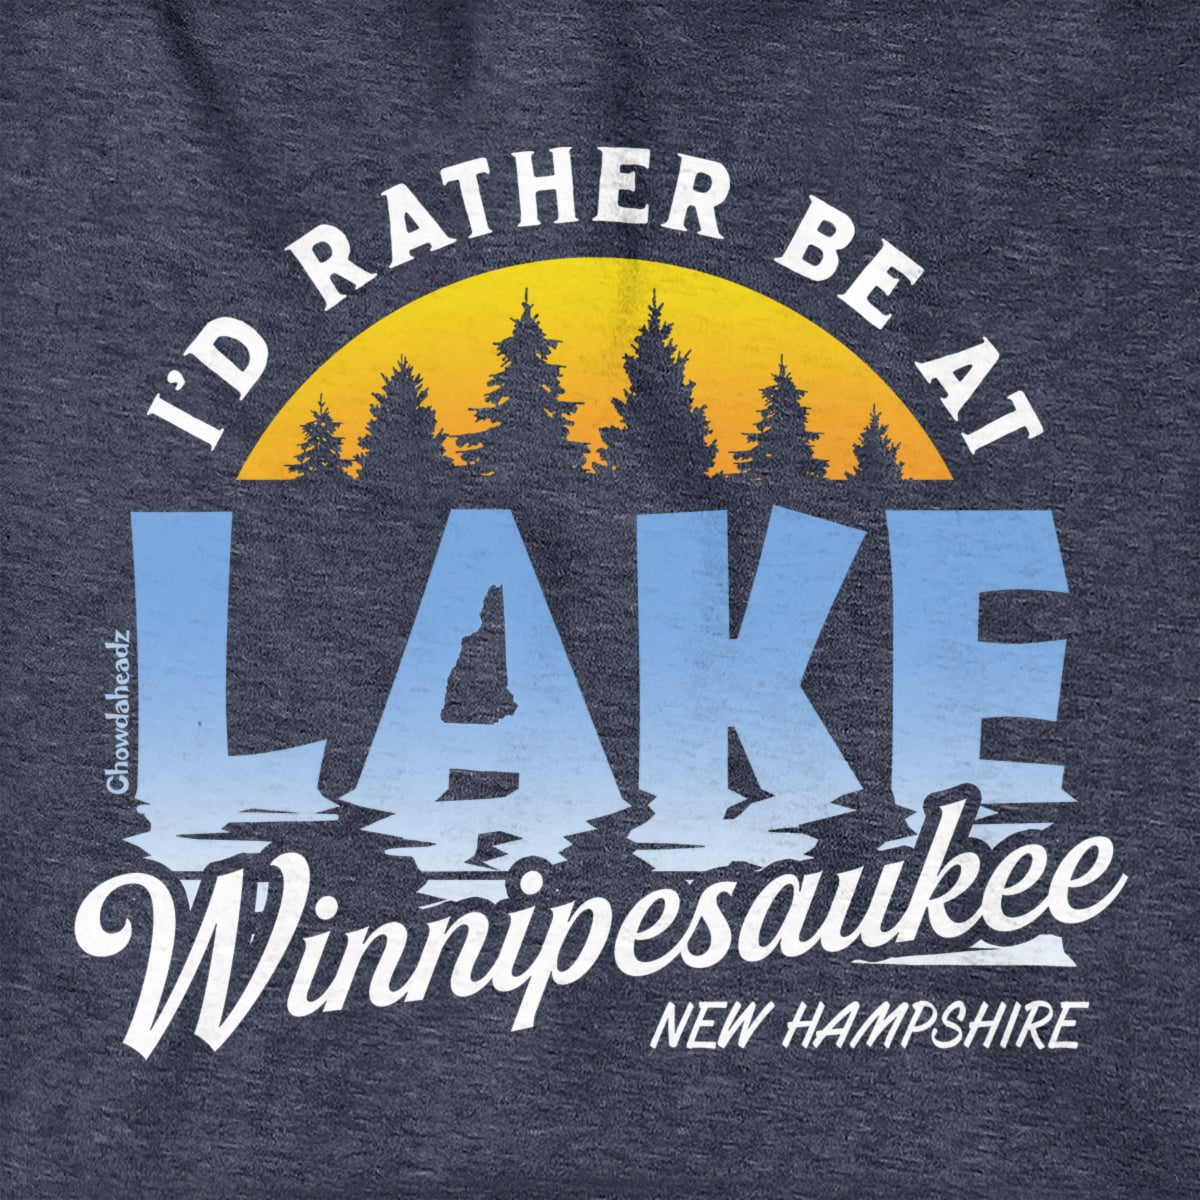 I'd Rather Be at Lake Winnipesaukee Hoodie - Chowdaheadz